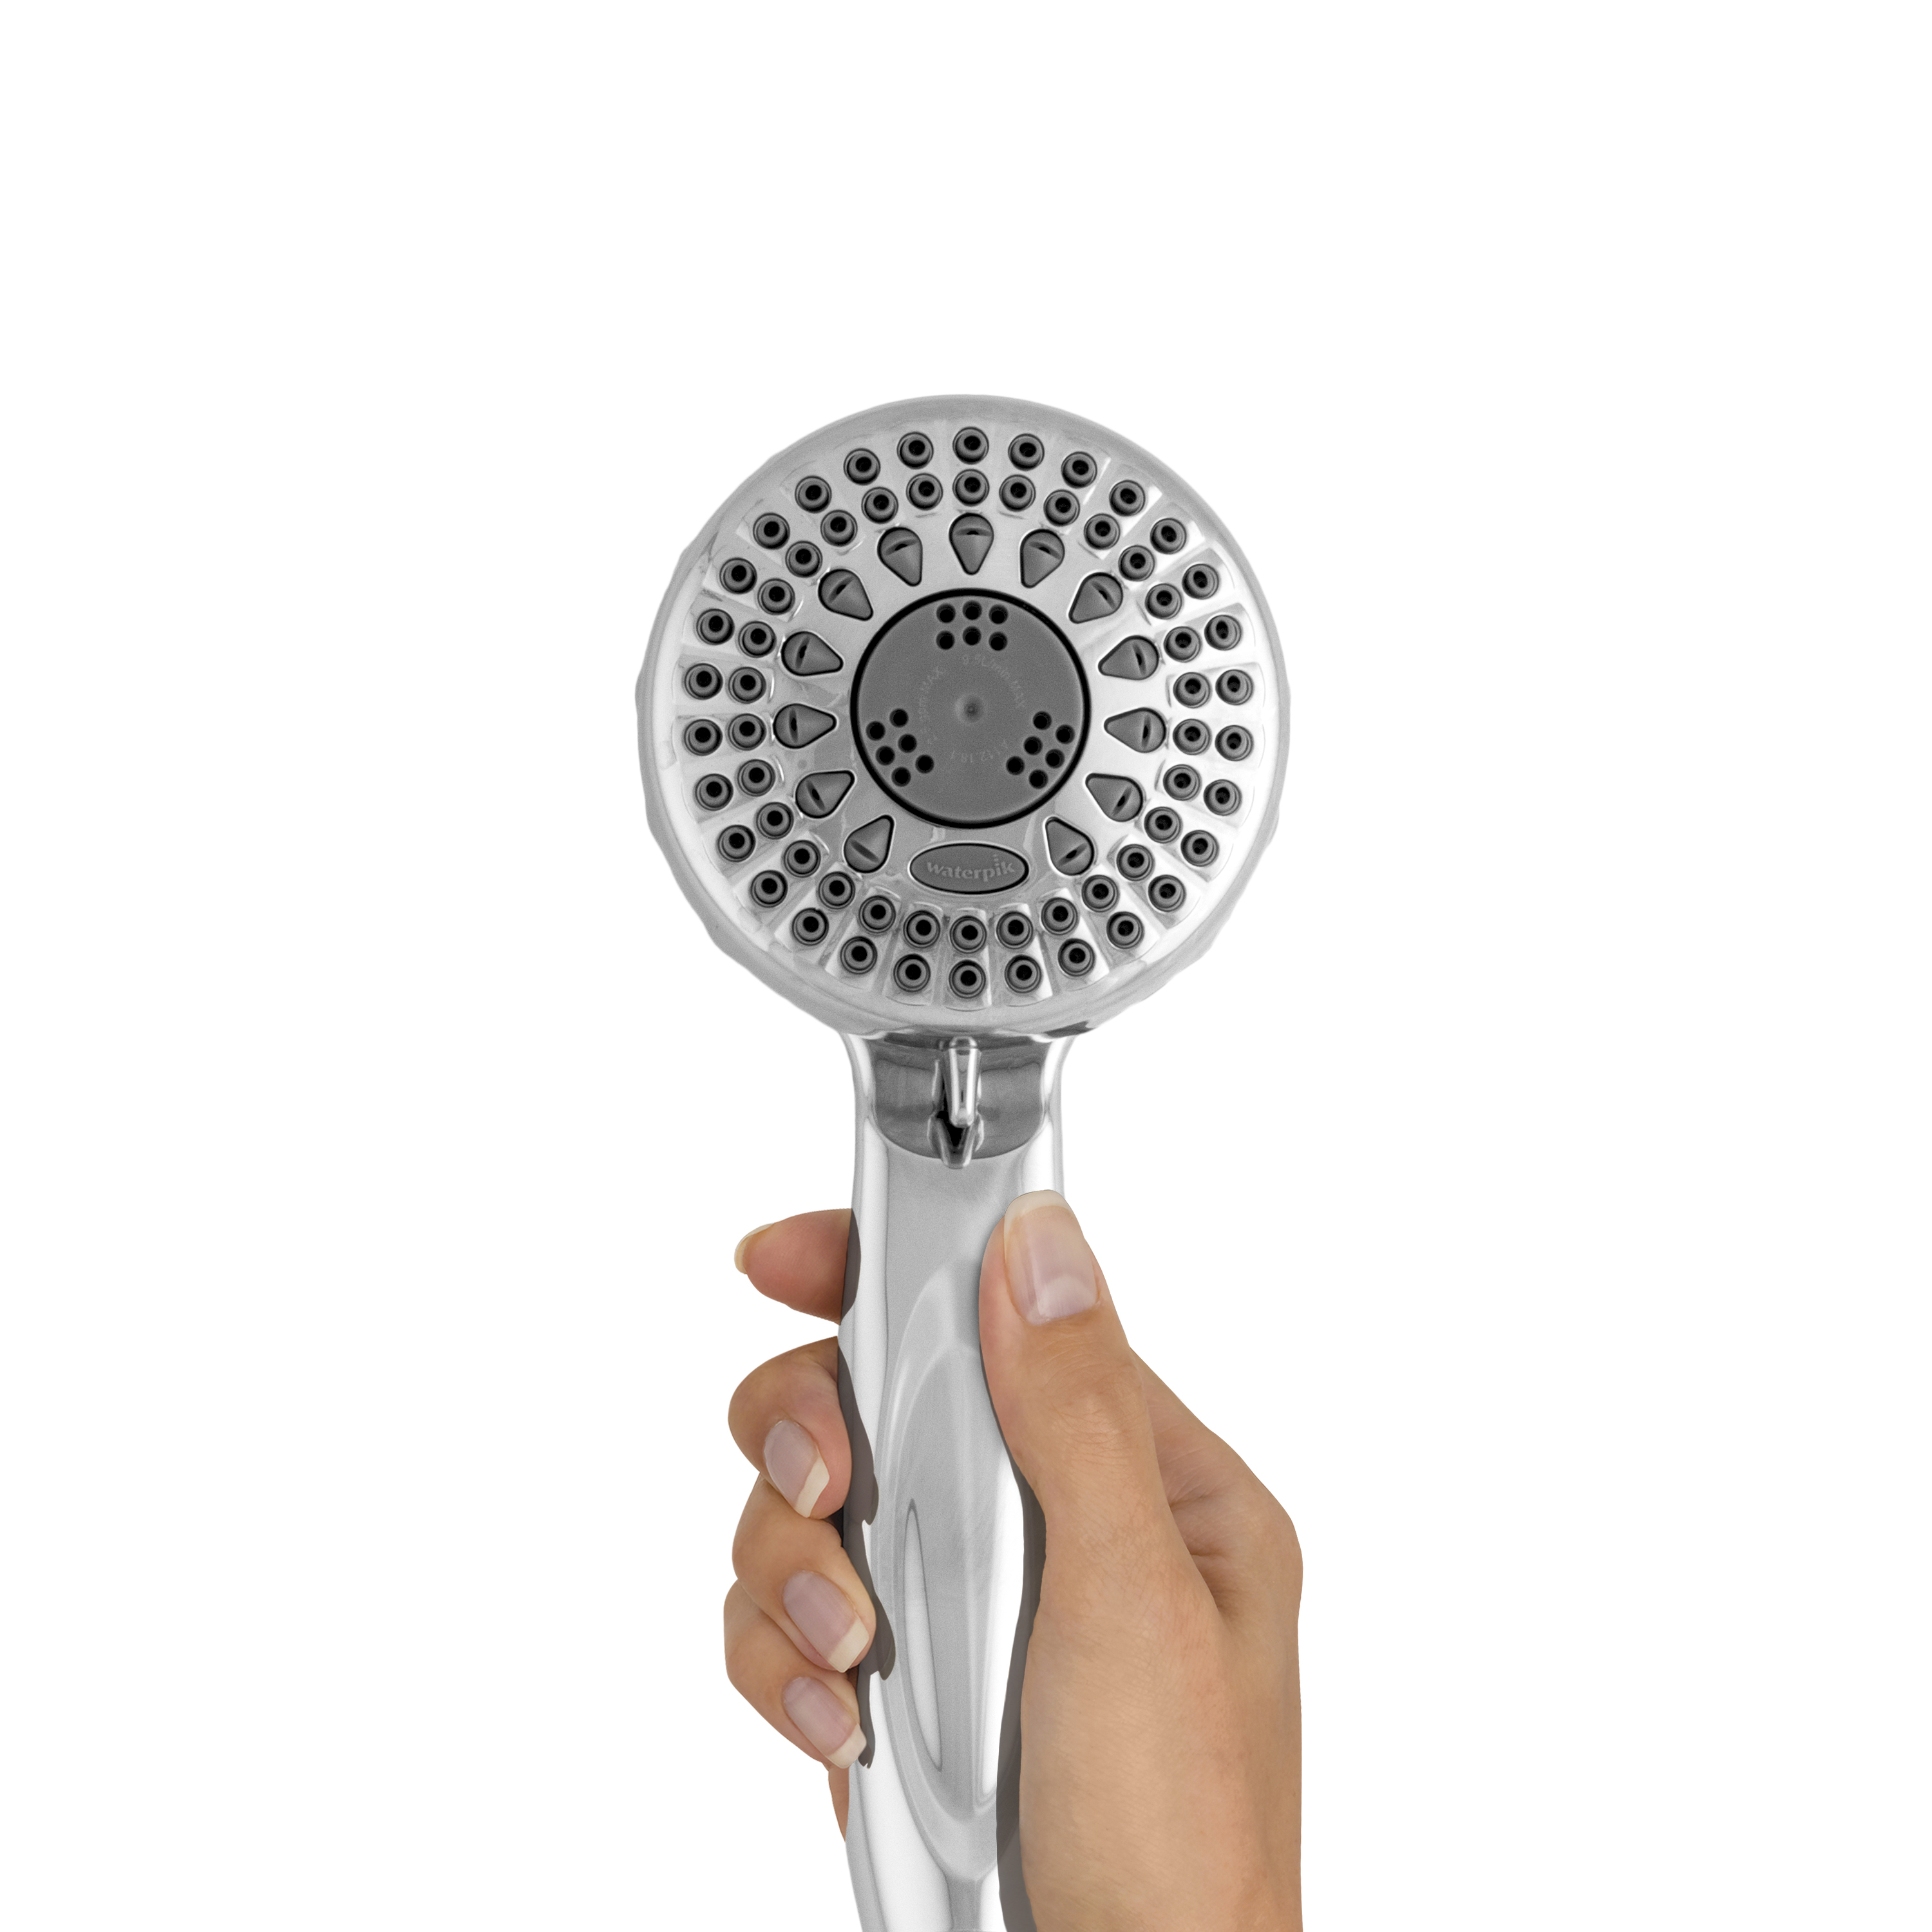 Waterpik 5-Mode PowerSpray+ Hand Held Shower Head, Chrome TRS-553 - image 5 of 6